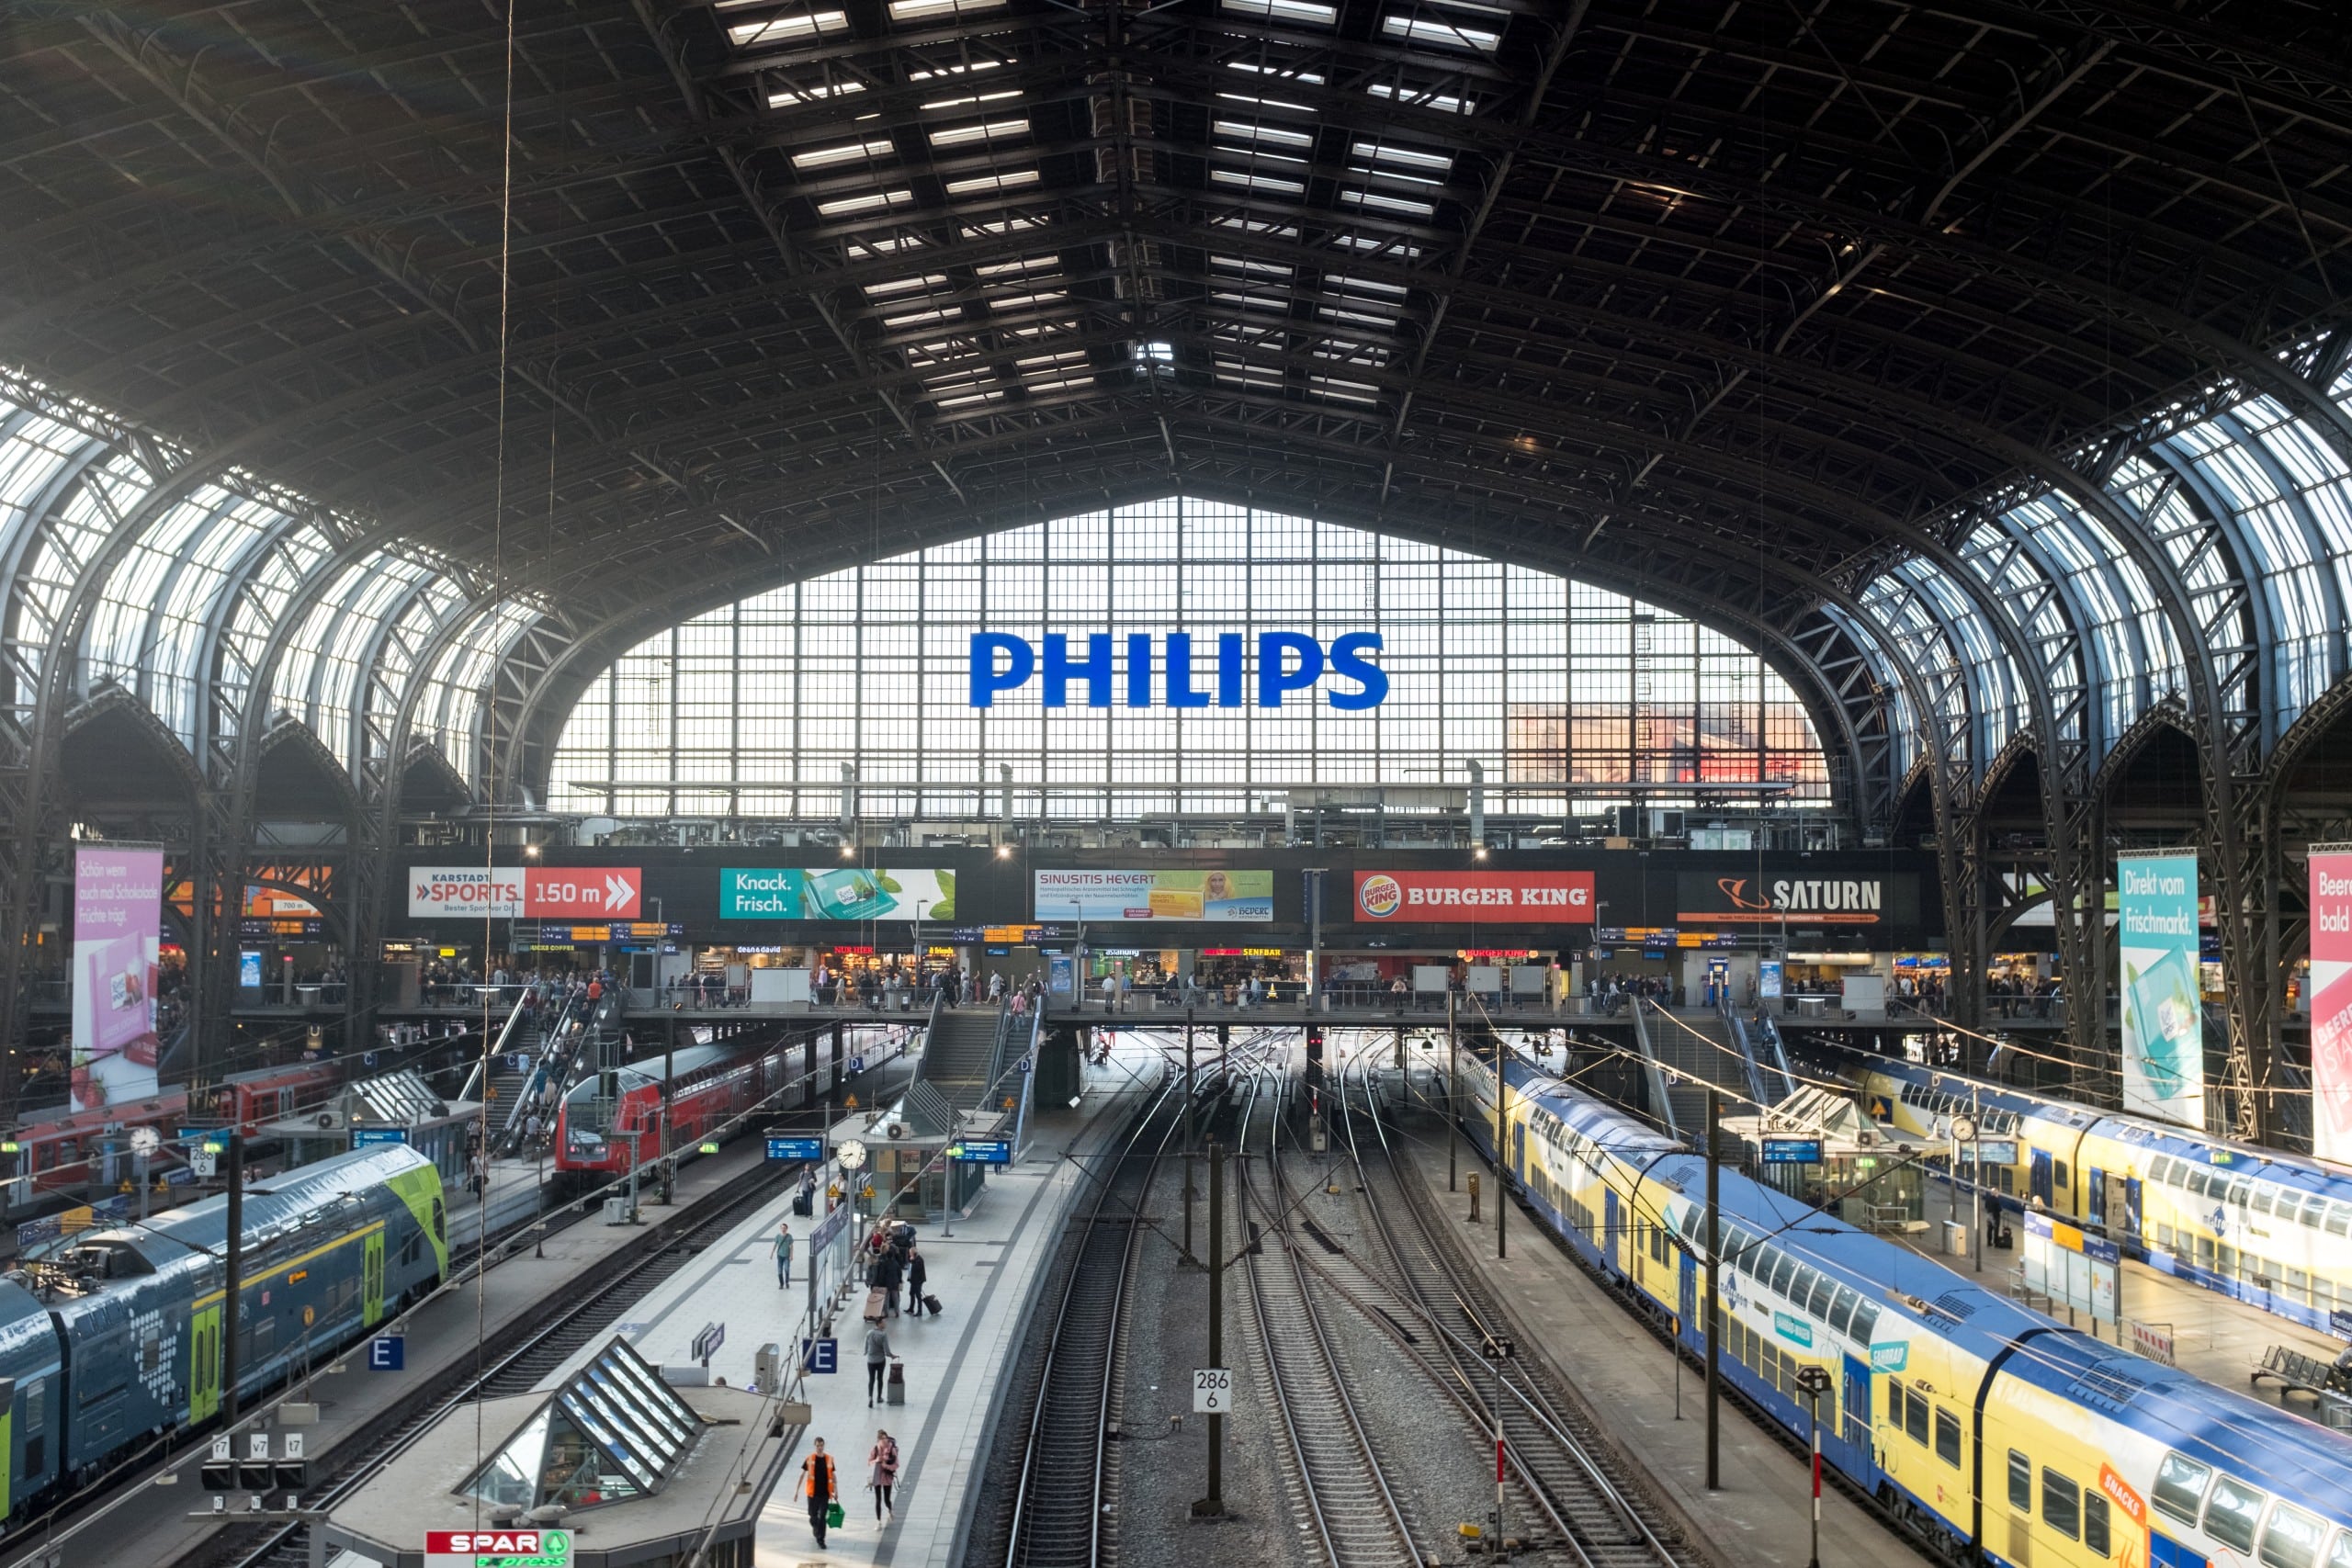 Ansicht des Hamburger Hauptbahnhofs von innen. Bildquelle: GGalloway19, CC BY-SA 4.0 , via Wikimedia Commons